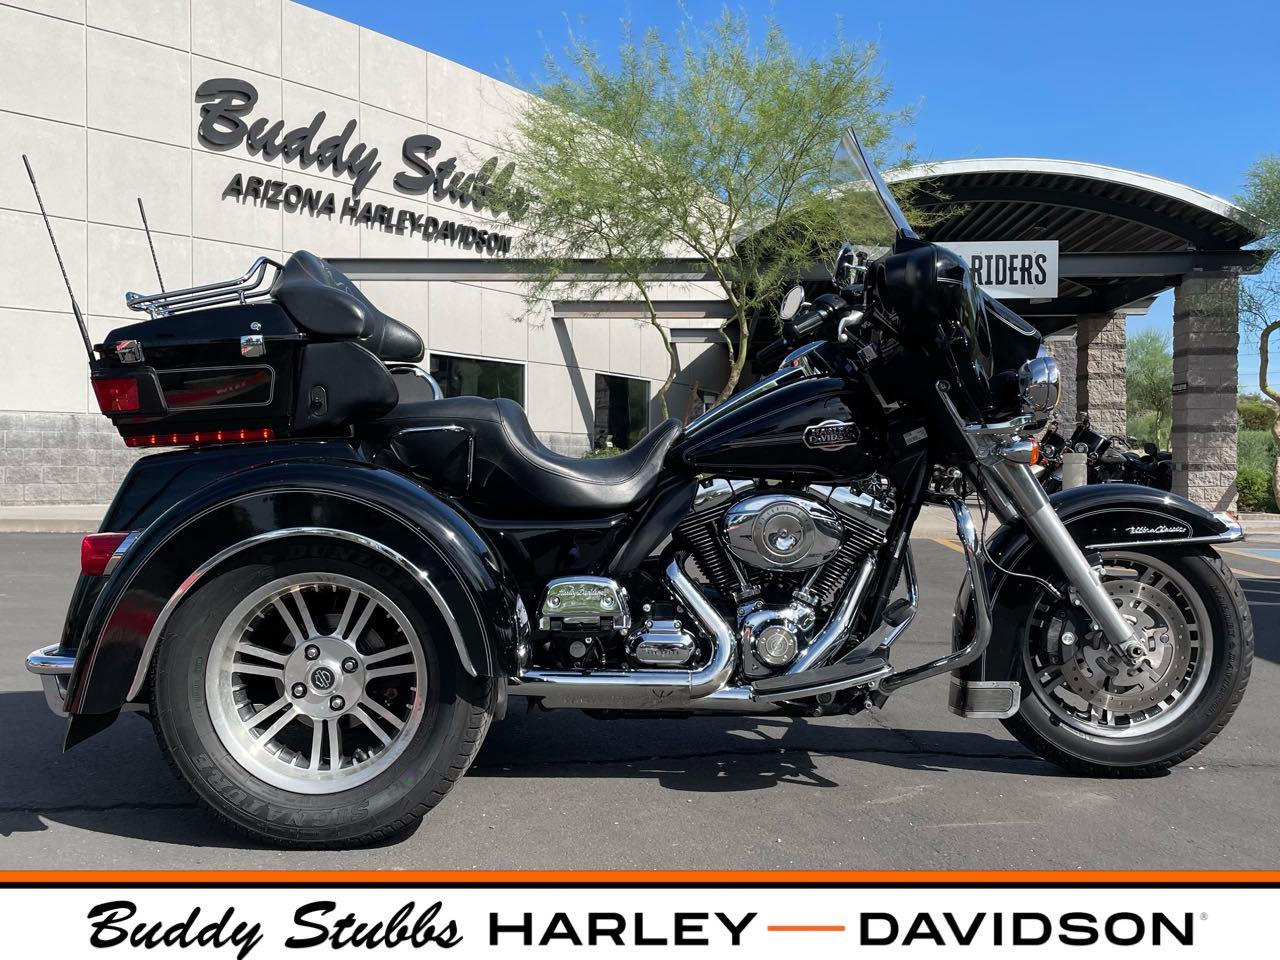 2010 Harley-Davidson Trike Tri Glide Ultra Classic at Buddy Stubbs Arizona Harley-Davidson